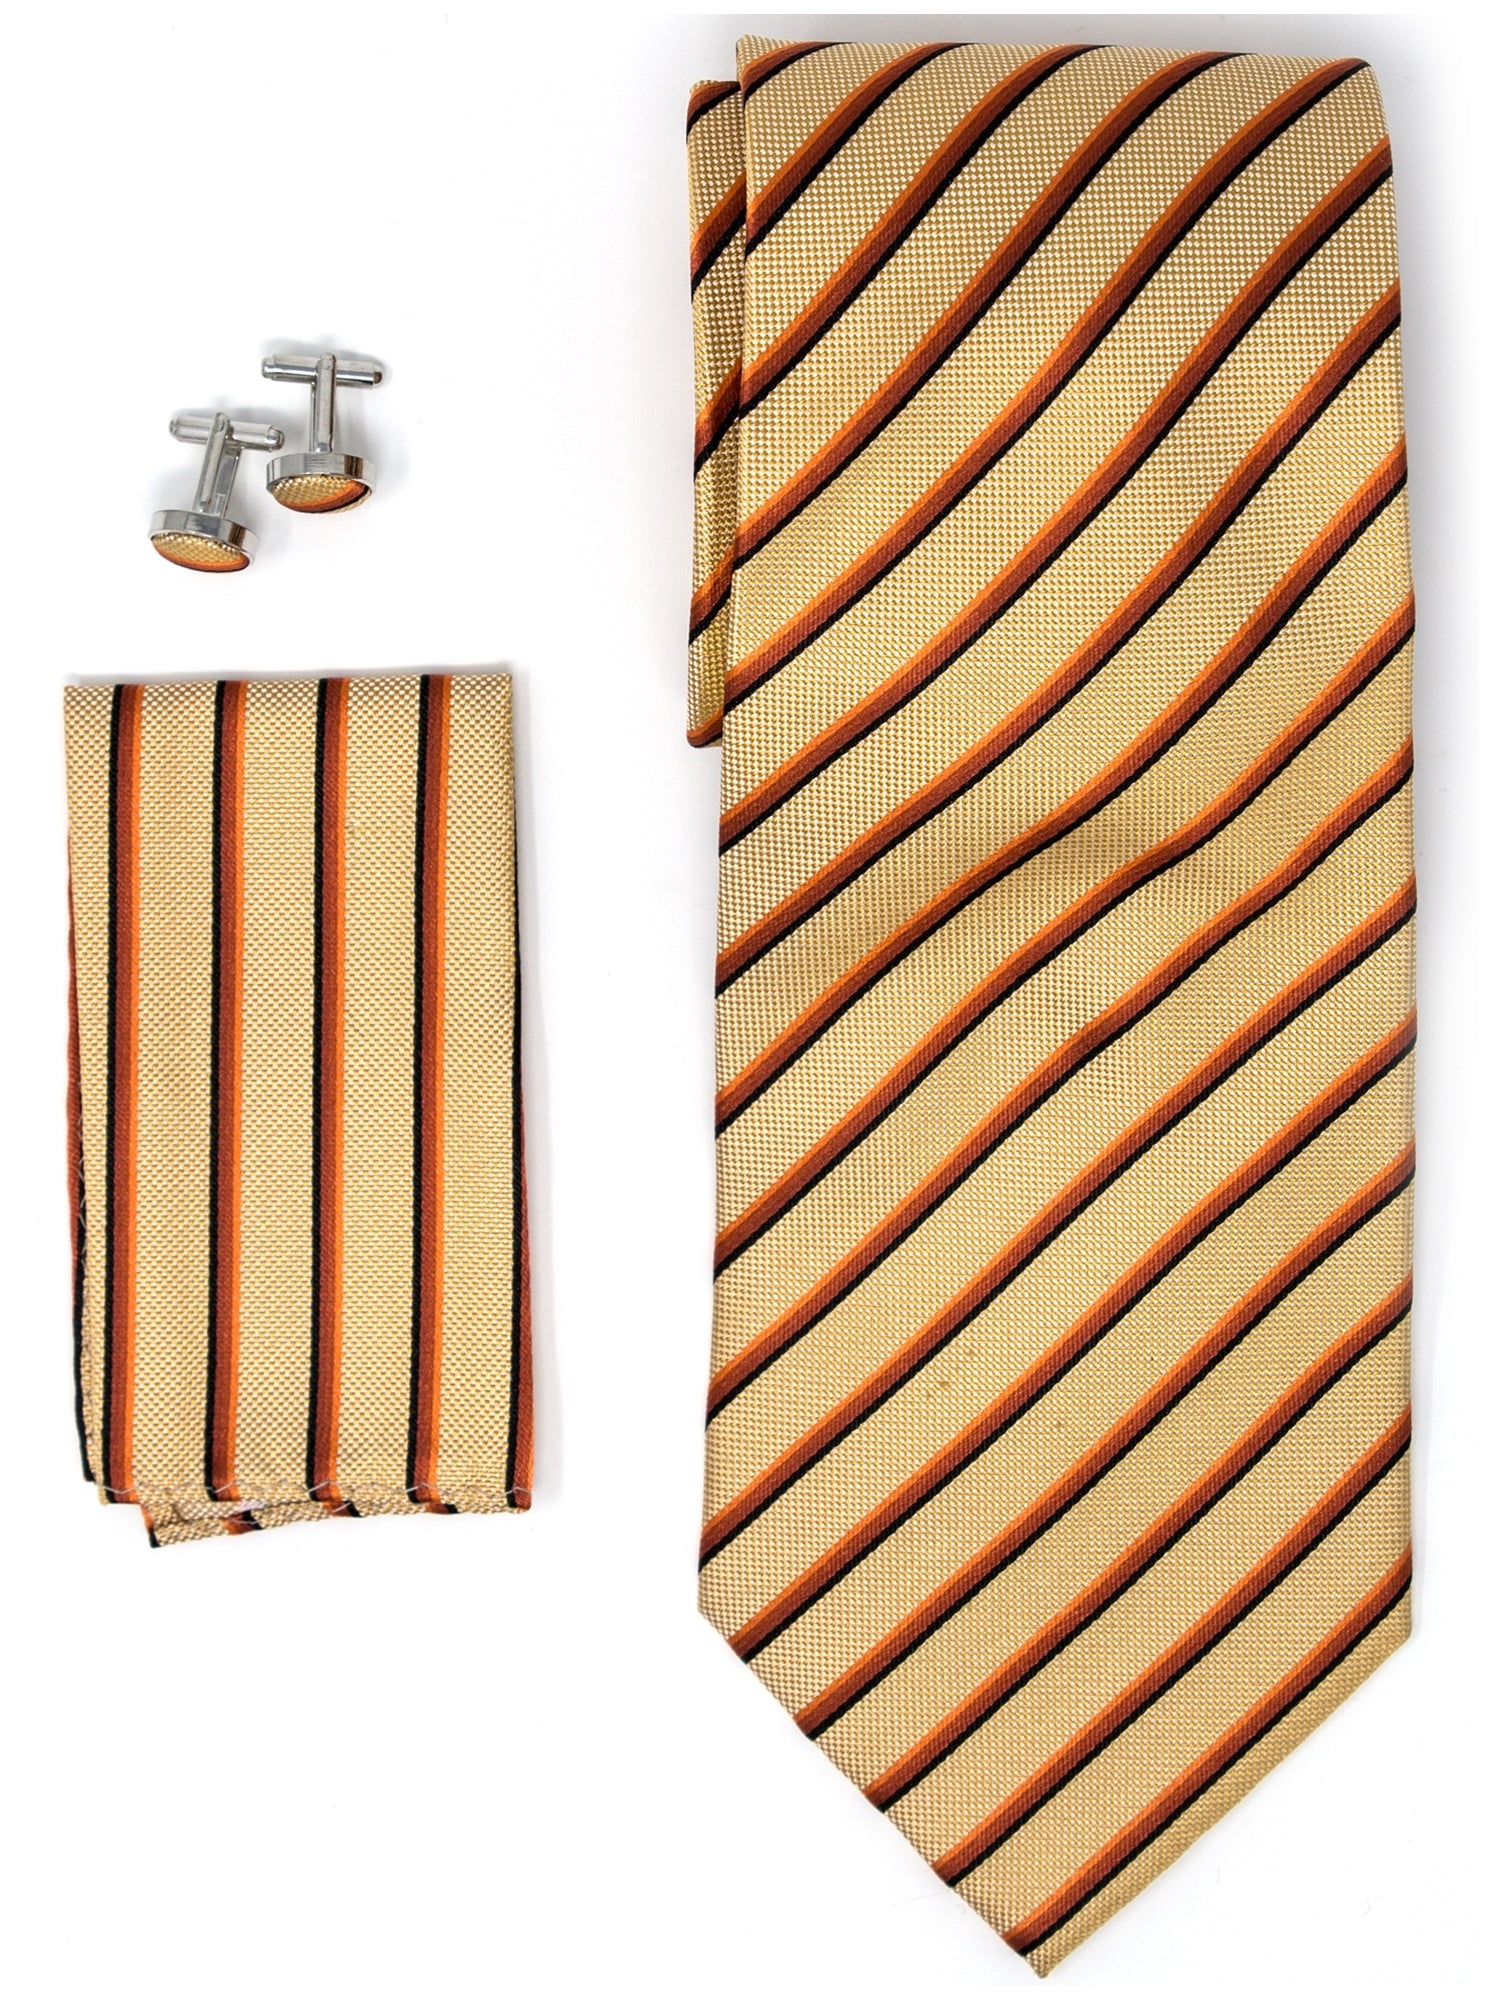 Men's Silk Neck Tie Set Cufflinks & Hanky Collection Neck Tie TheDapperTie Brown, Orange, Black And Ivory Stripes Regular 